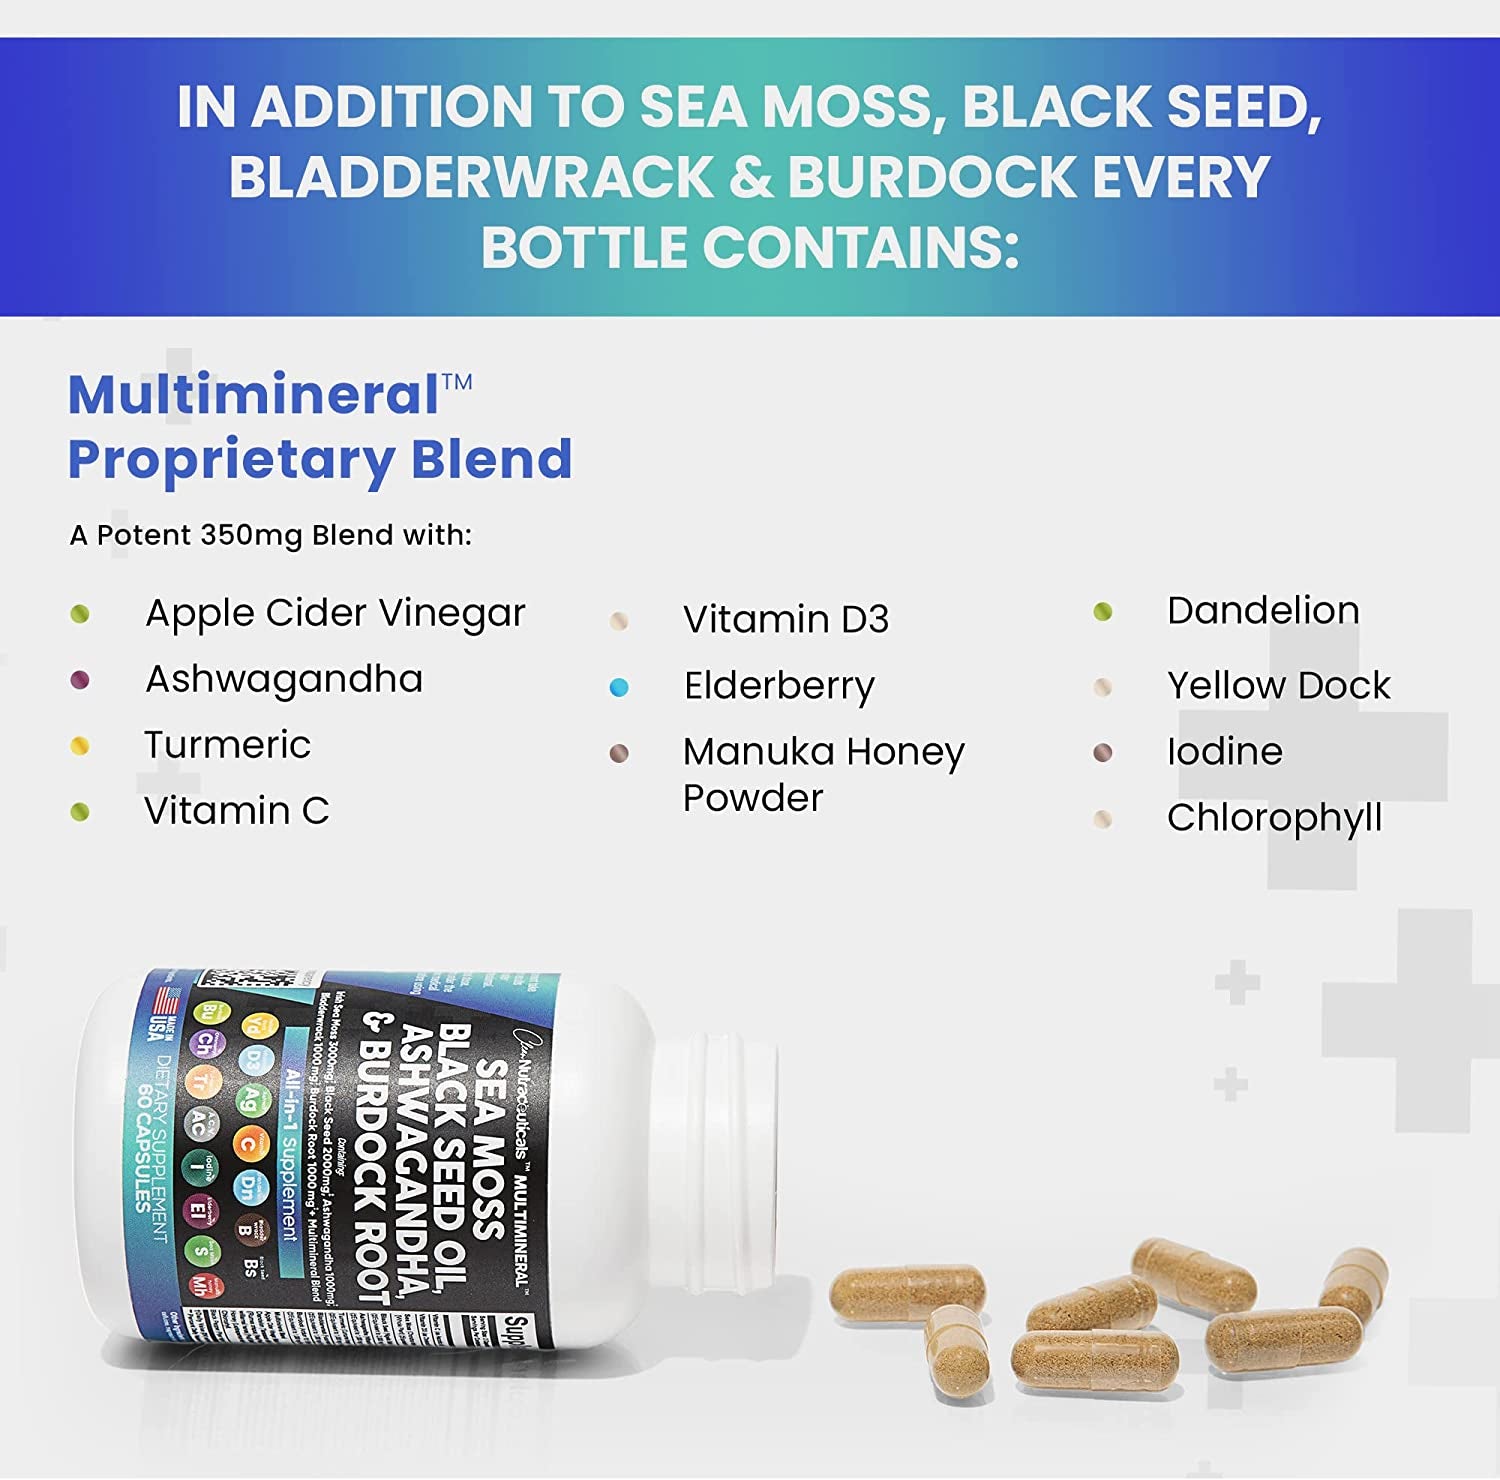 Sea Moss 3000Mg Black Seed Oil 2000Mg Ashwagandha 1000Mg Turmeric 1000Mg Bladderwrack 1000Mg Burdock 1000Mg & Vitamin C & D3 with Elderberry Manuka Dandelion Yellow Dock Iodine Chlorophyll ACV